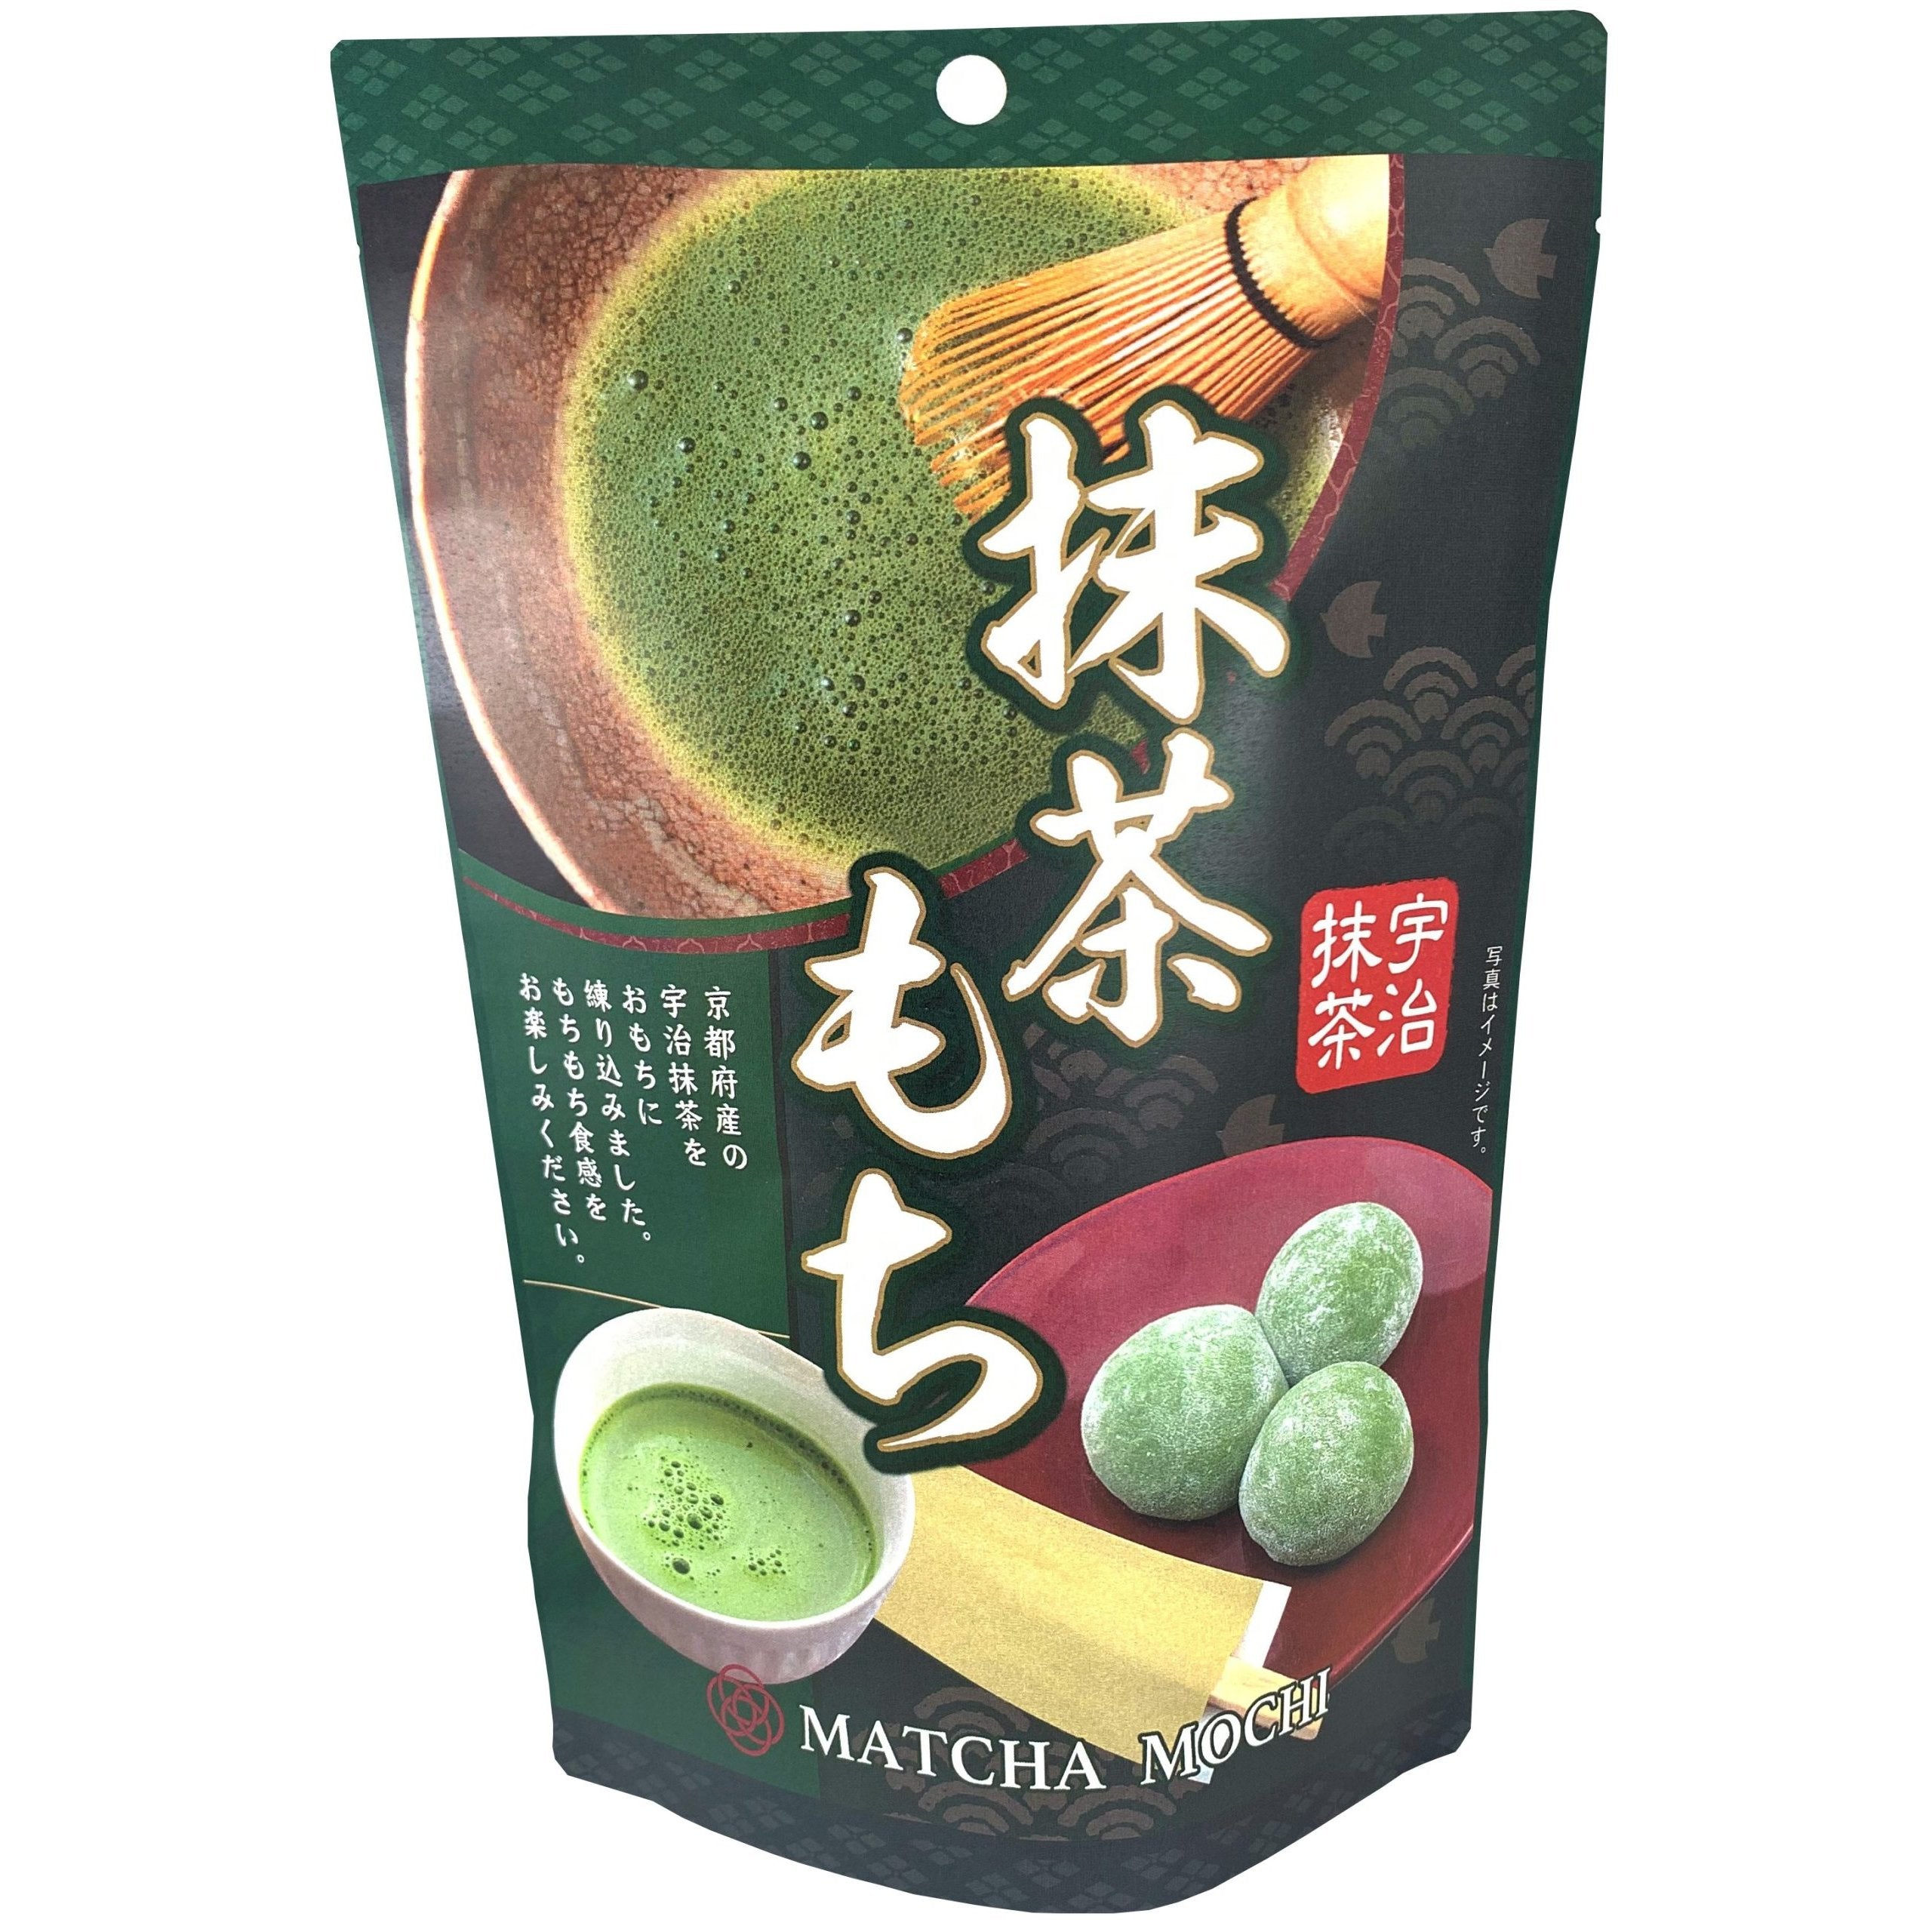 Seiki Bite Sized Mochi Snack Matcha Green Tea Flavor 130g